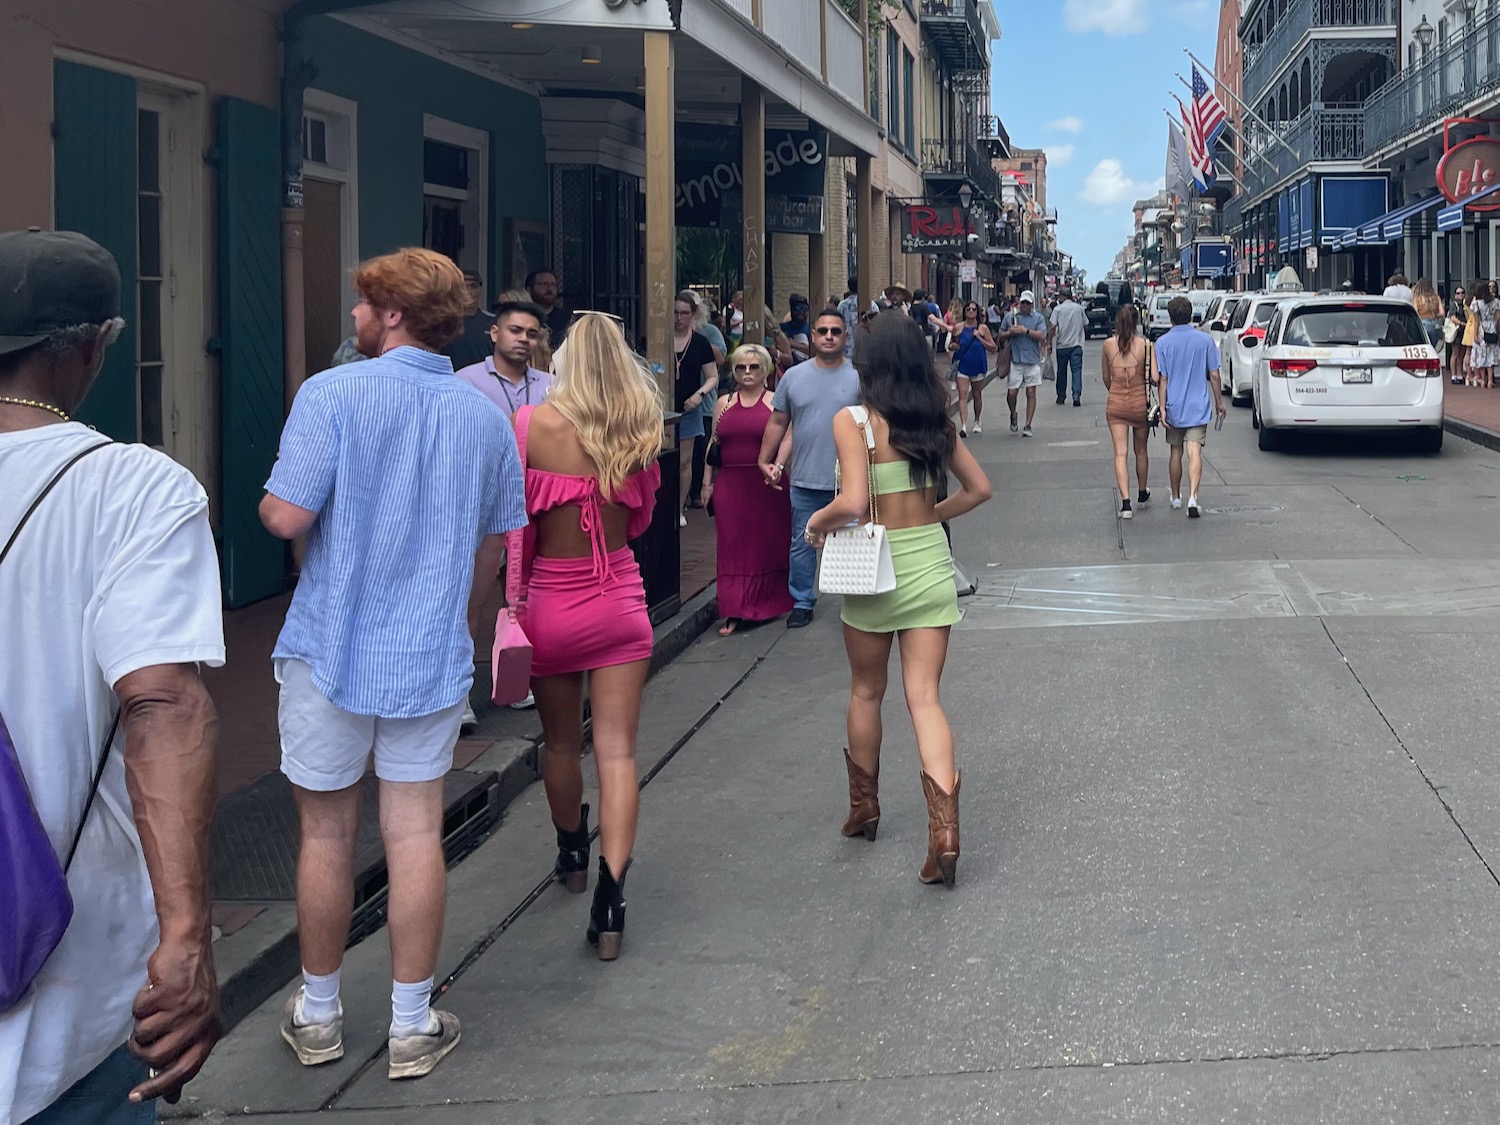 david landau share escorts in new orleans photos